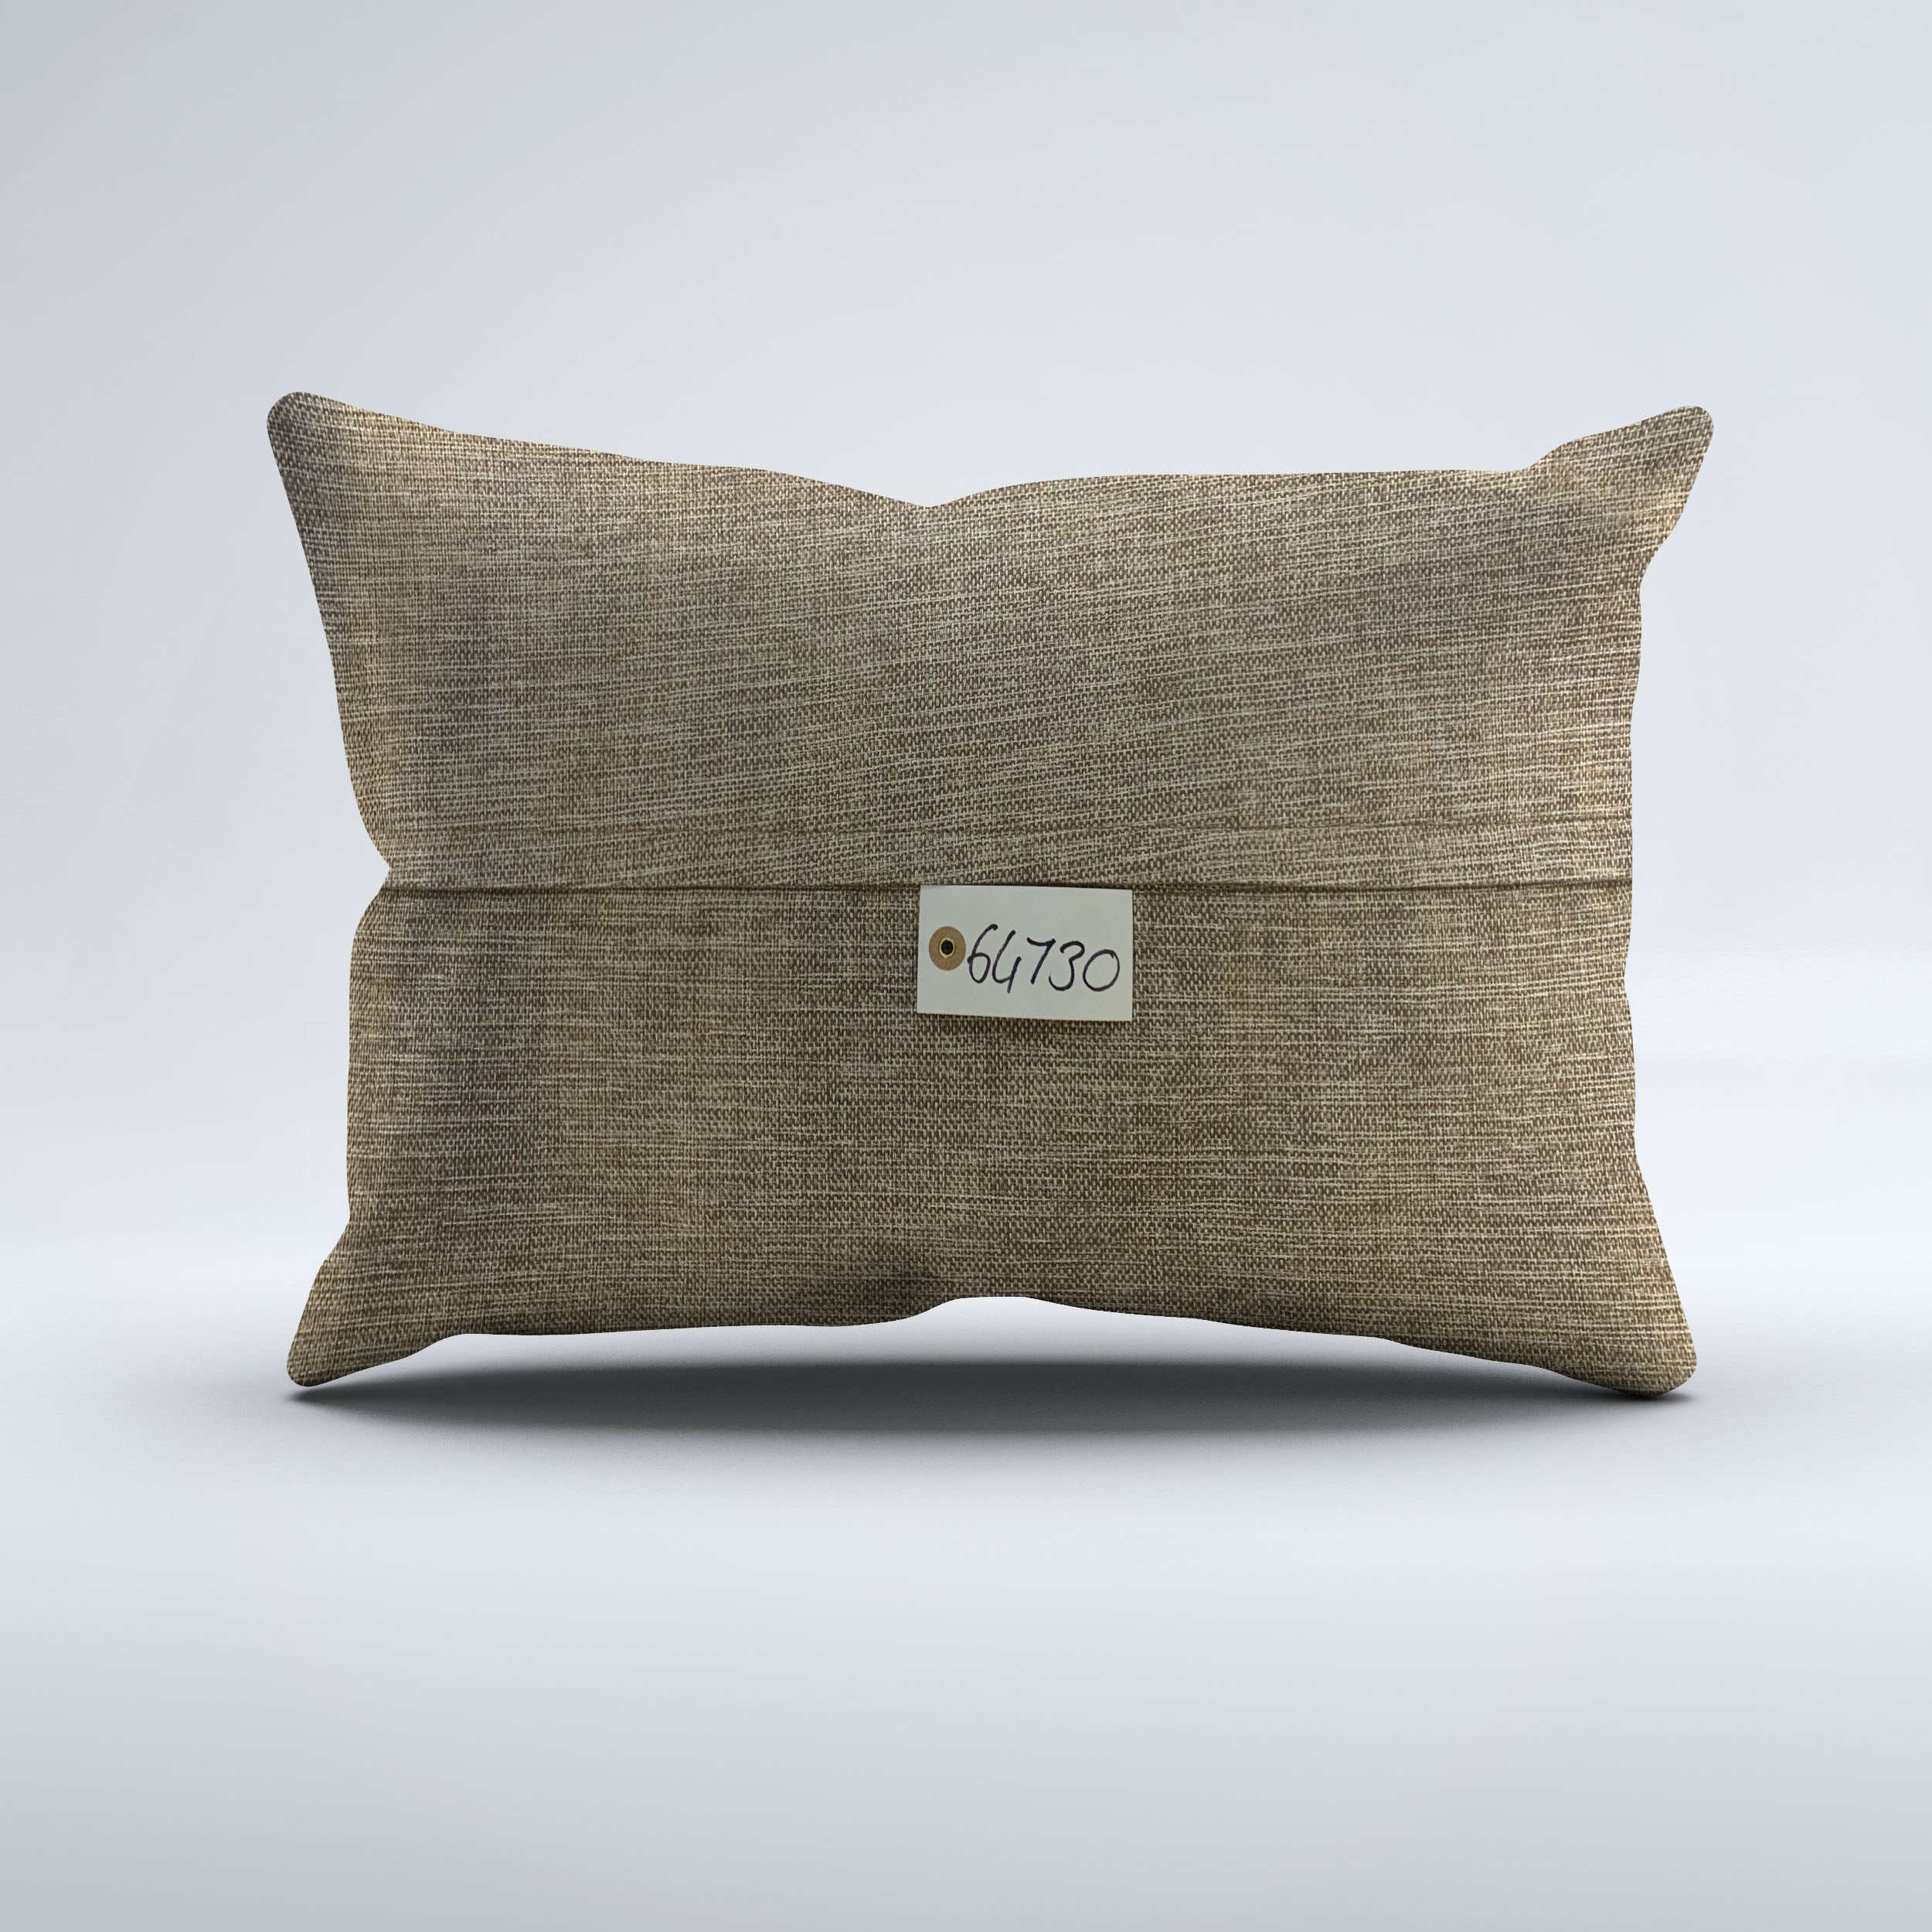 Vintage Turkish Kilim Cushion Cover 60x40 cm Square Wool Kelim Pillowcase 64730